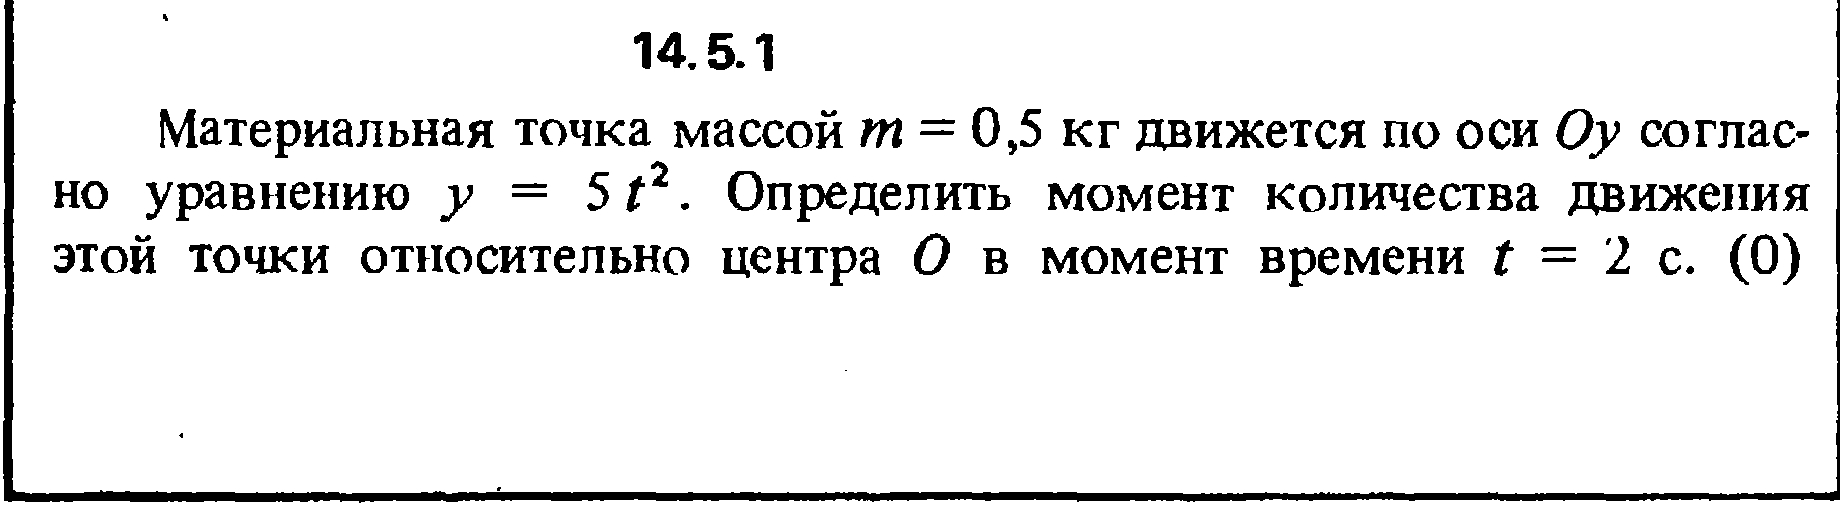 Решение задачи 14.5.1 из сборника Кепе О.Е. 1989 года